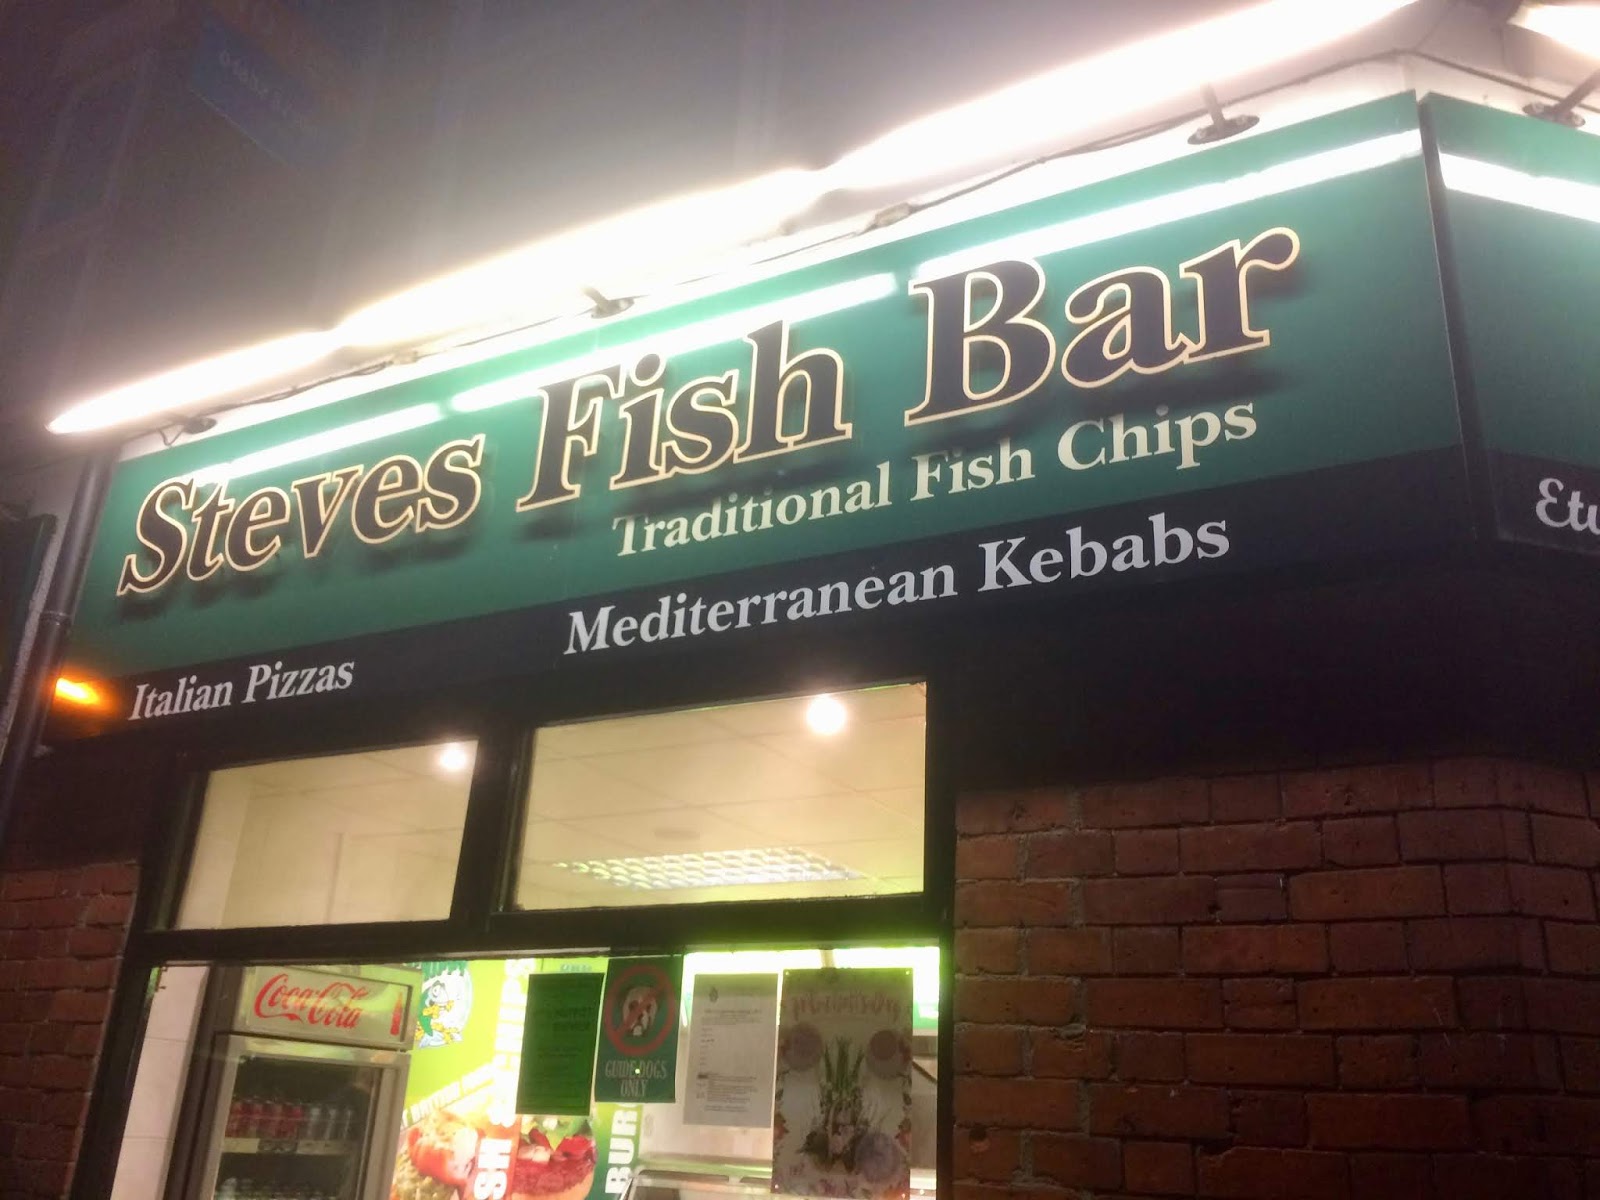 Steve's Fish Bar, Etwall, Derbyshire